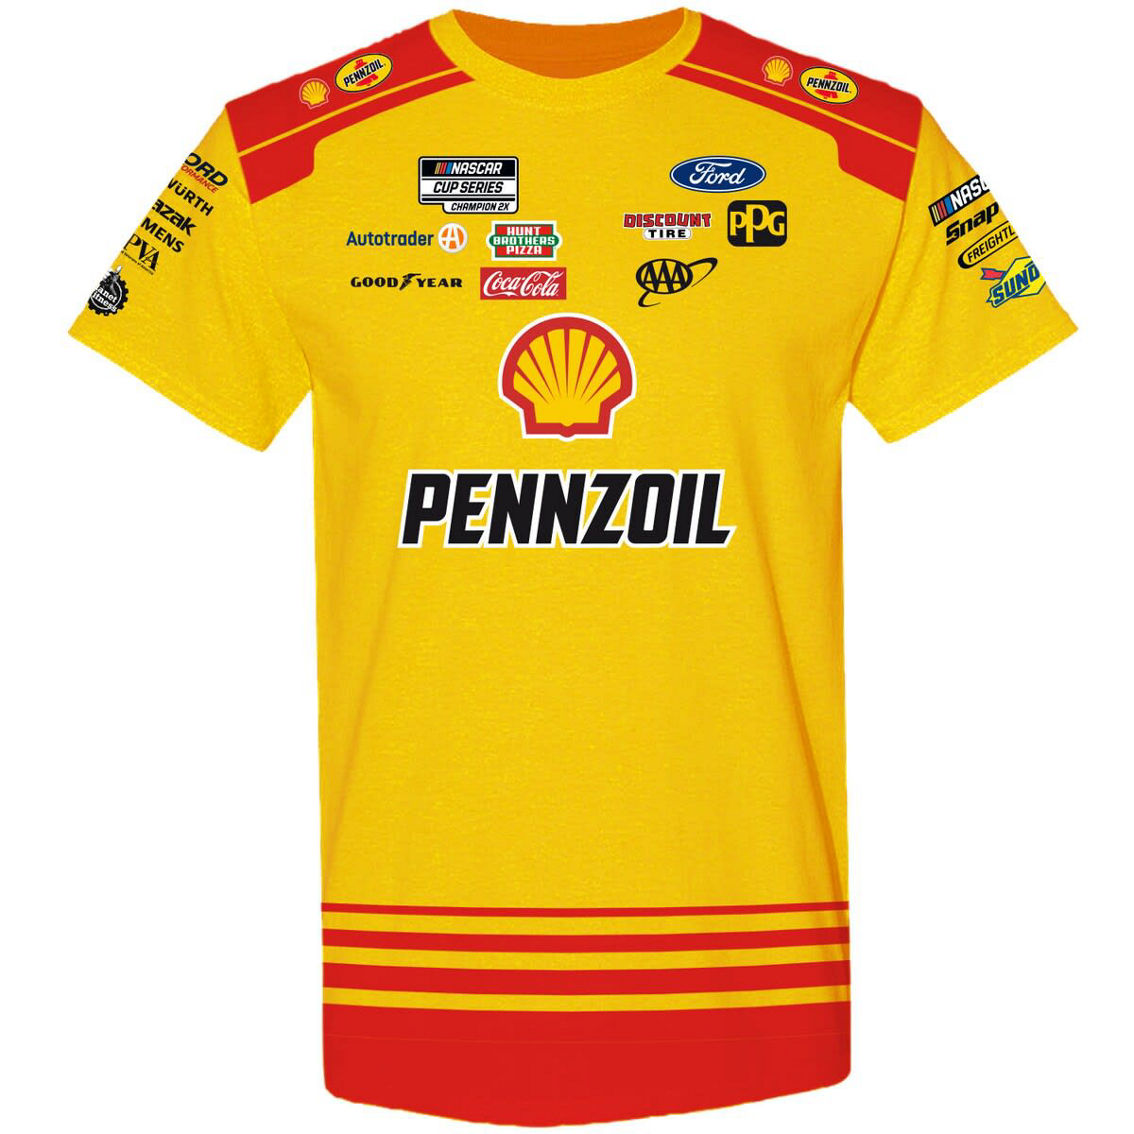 Team Penske Men's Team Penske Yellow/Red Joey Logano Shell-Pennzoil Uniform T-Shirt - Image 3 of 4